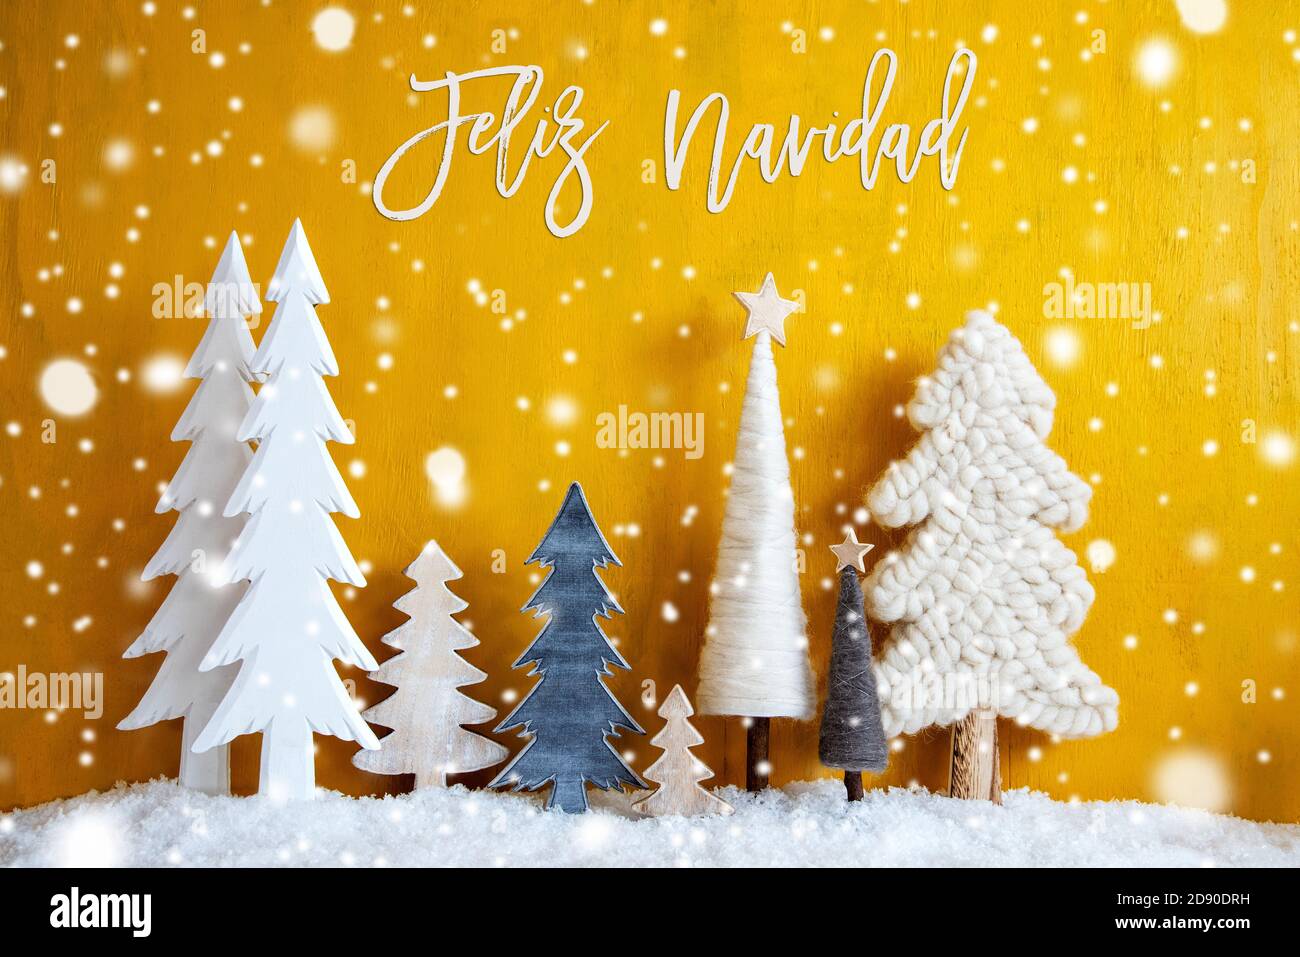 Trees, Snowflakes, Yellow Background, Feliz Navidad Means Merry Christmas Stock Photo